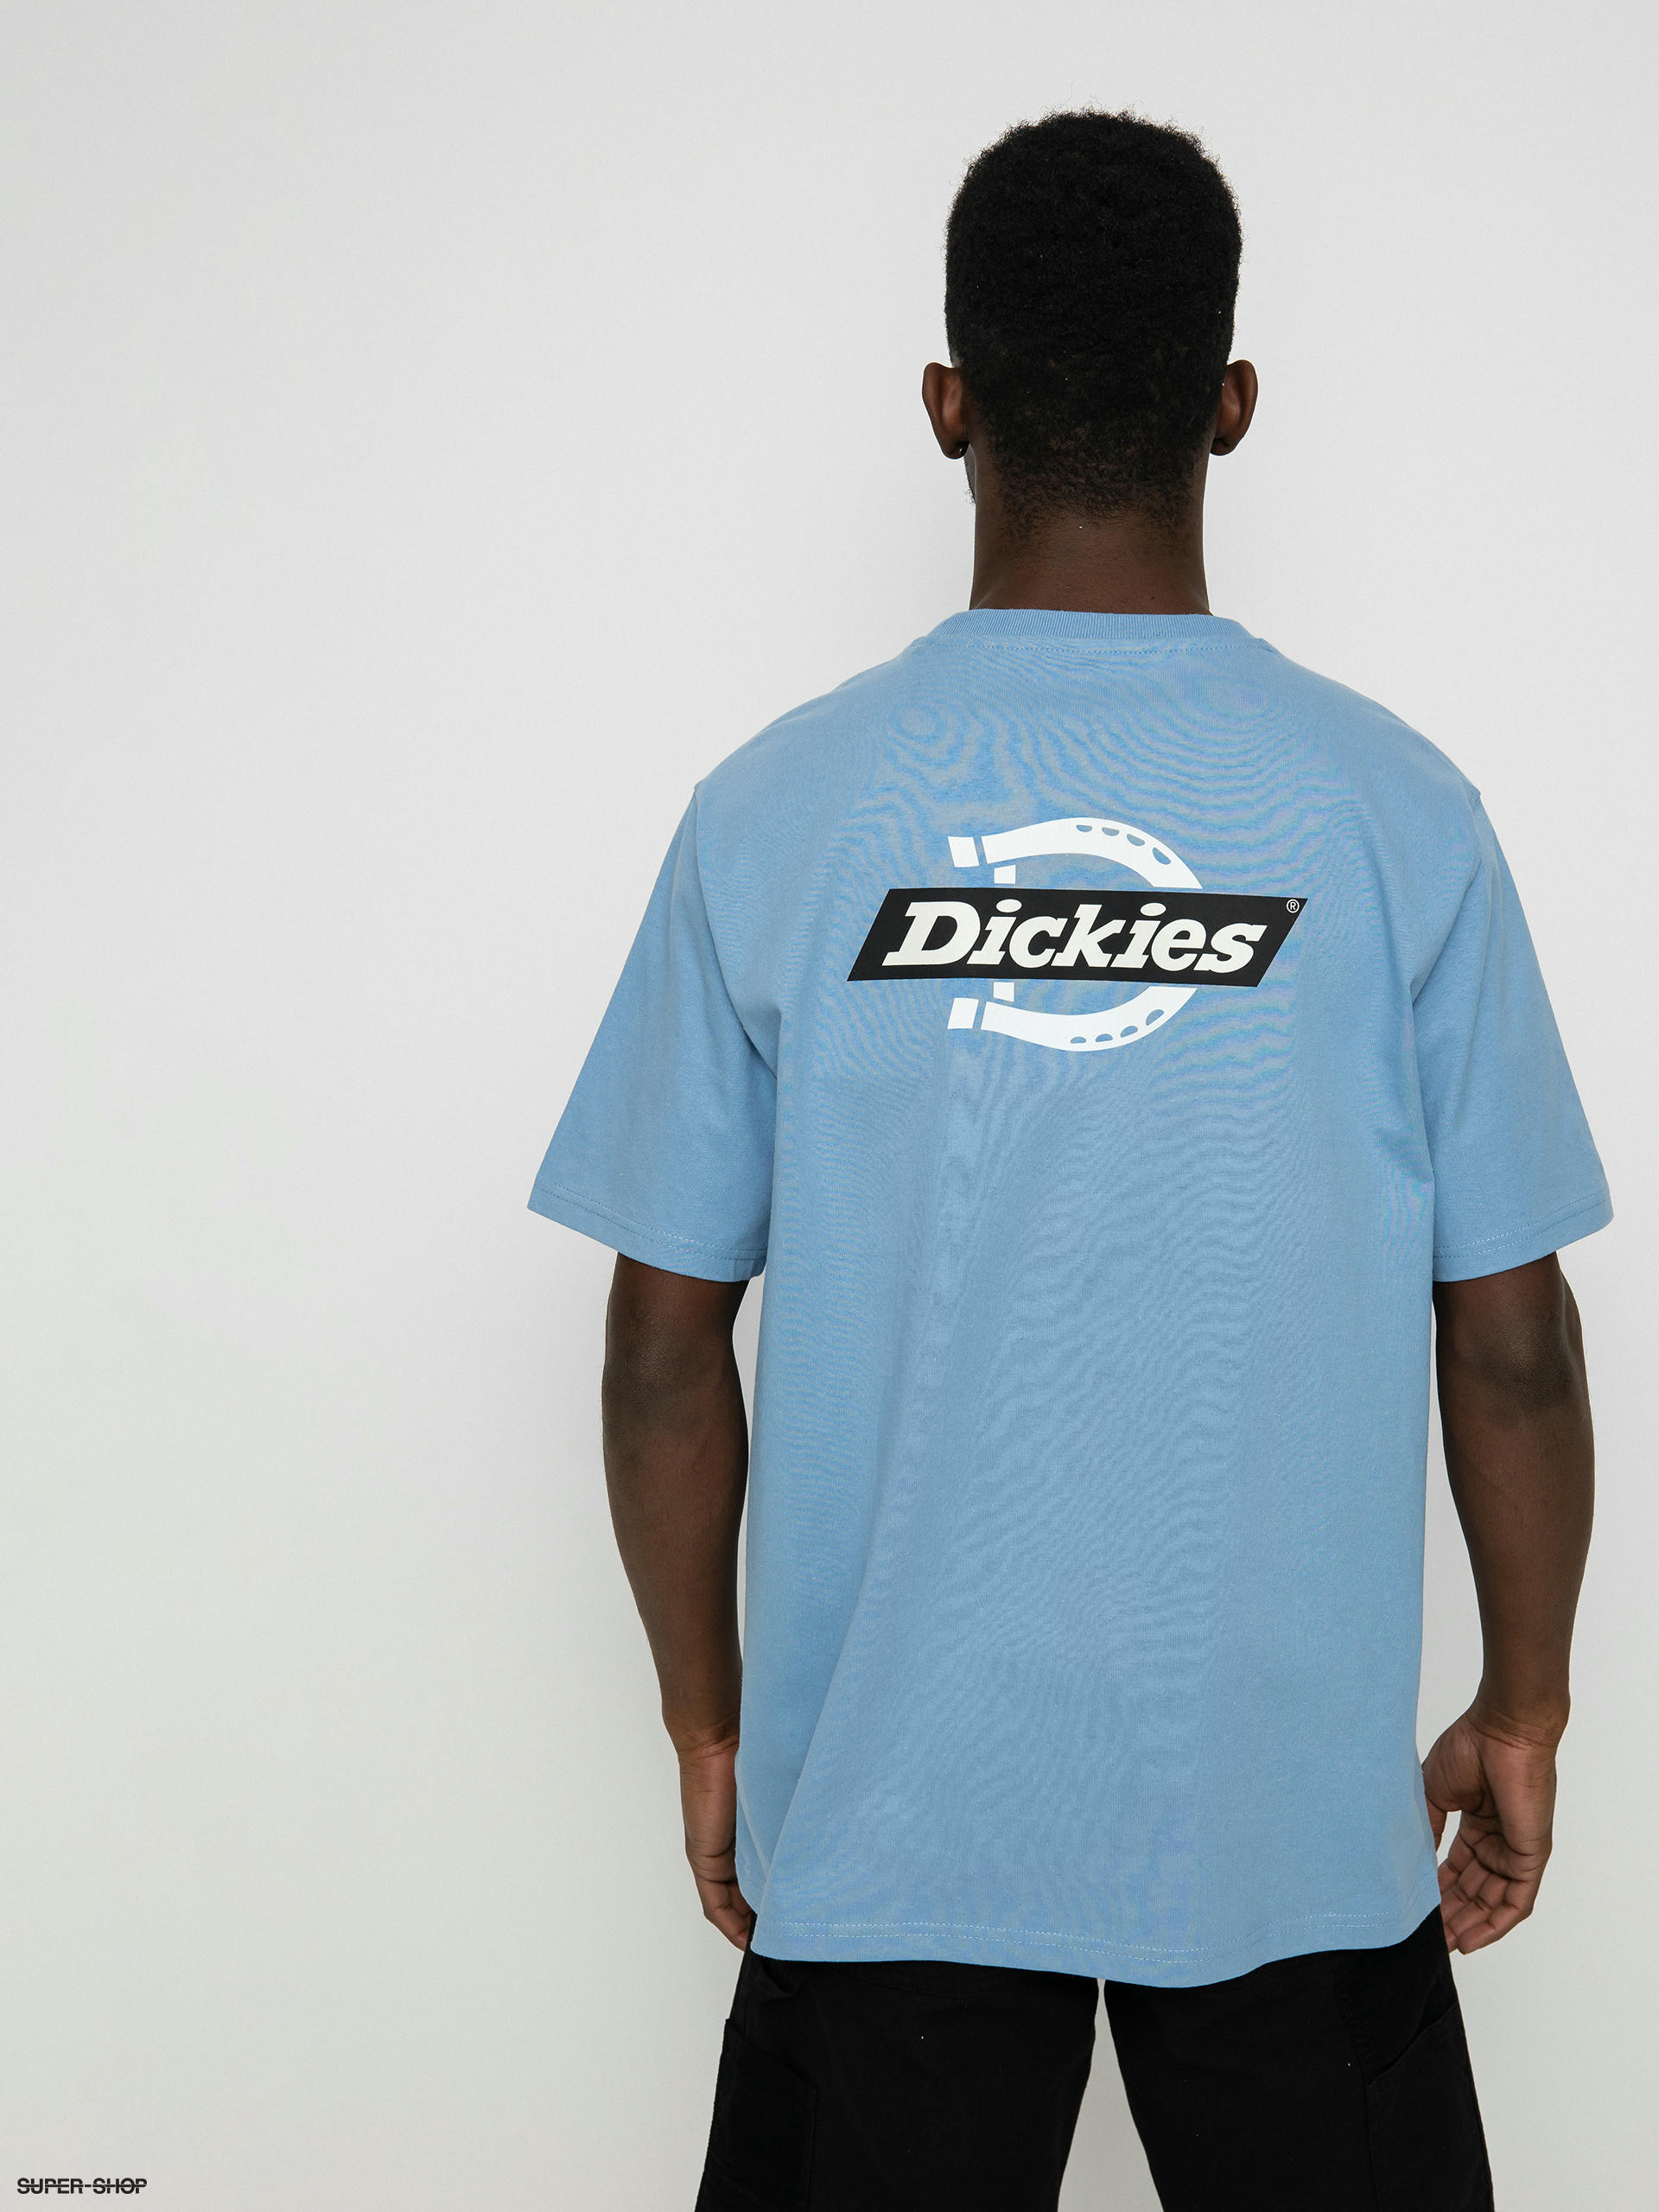 Details - Dickies T-shirt Ruston (allure)